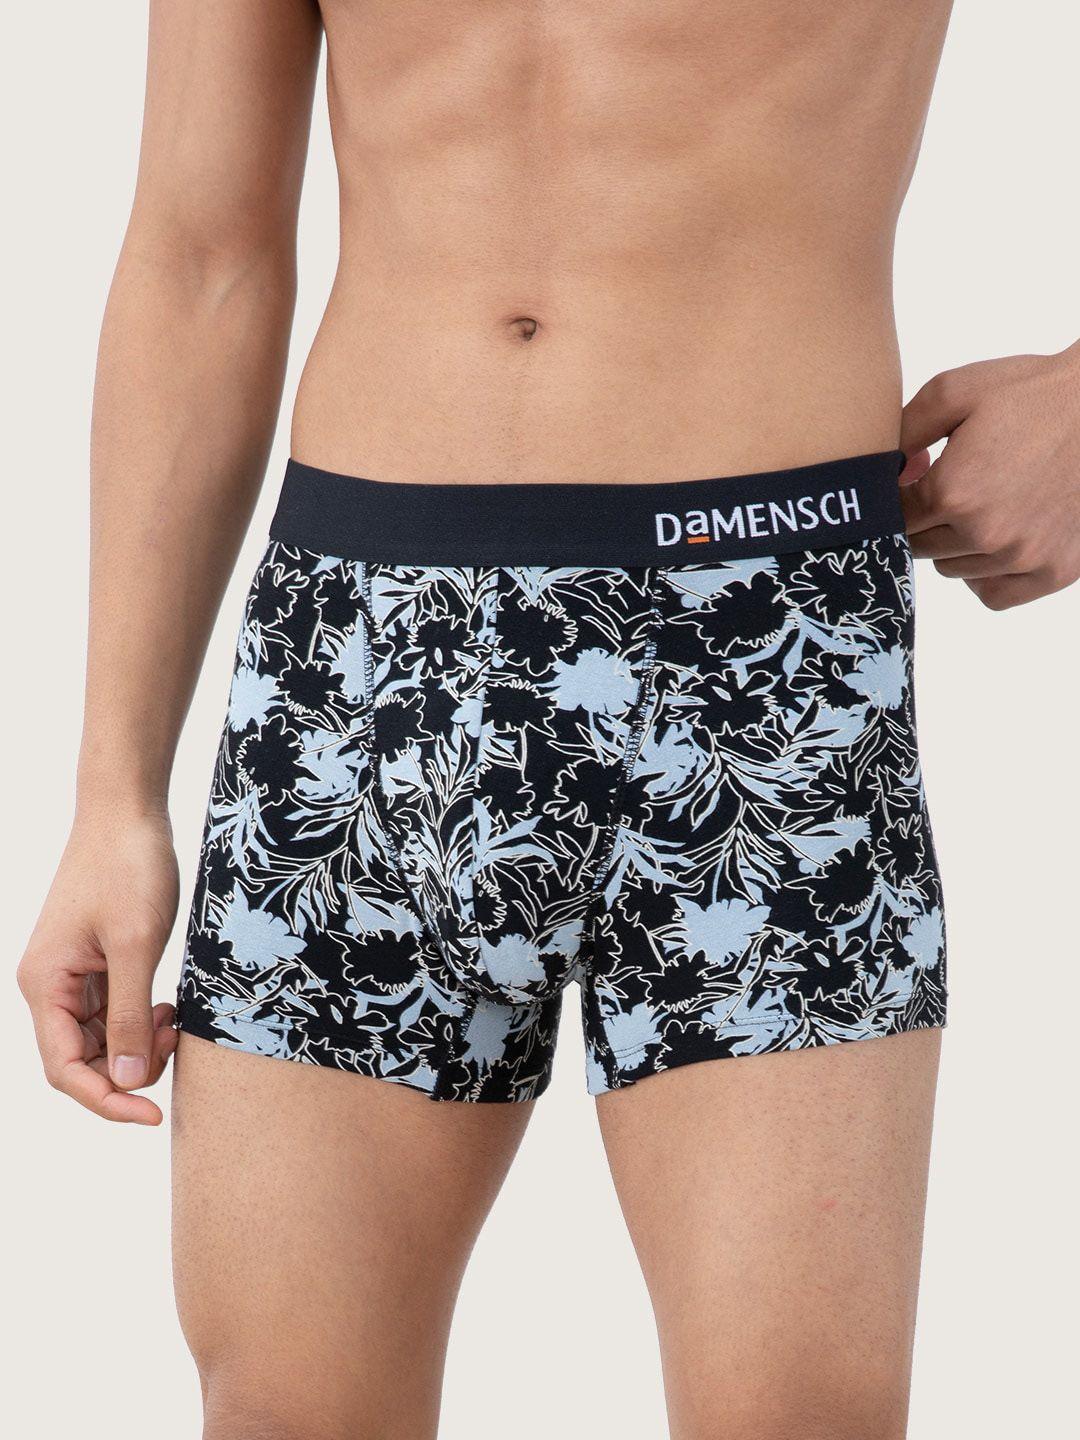 damensch men blue & black printed deo soft deodorizing trunks